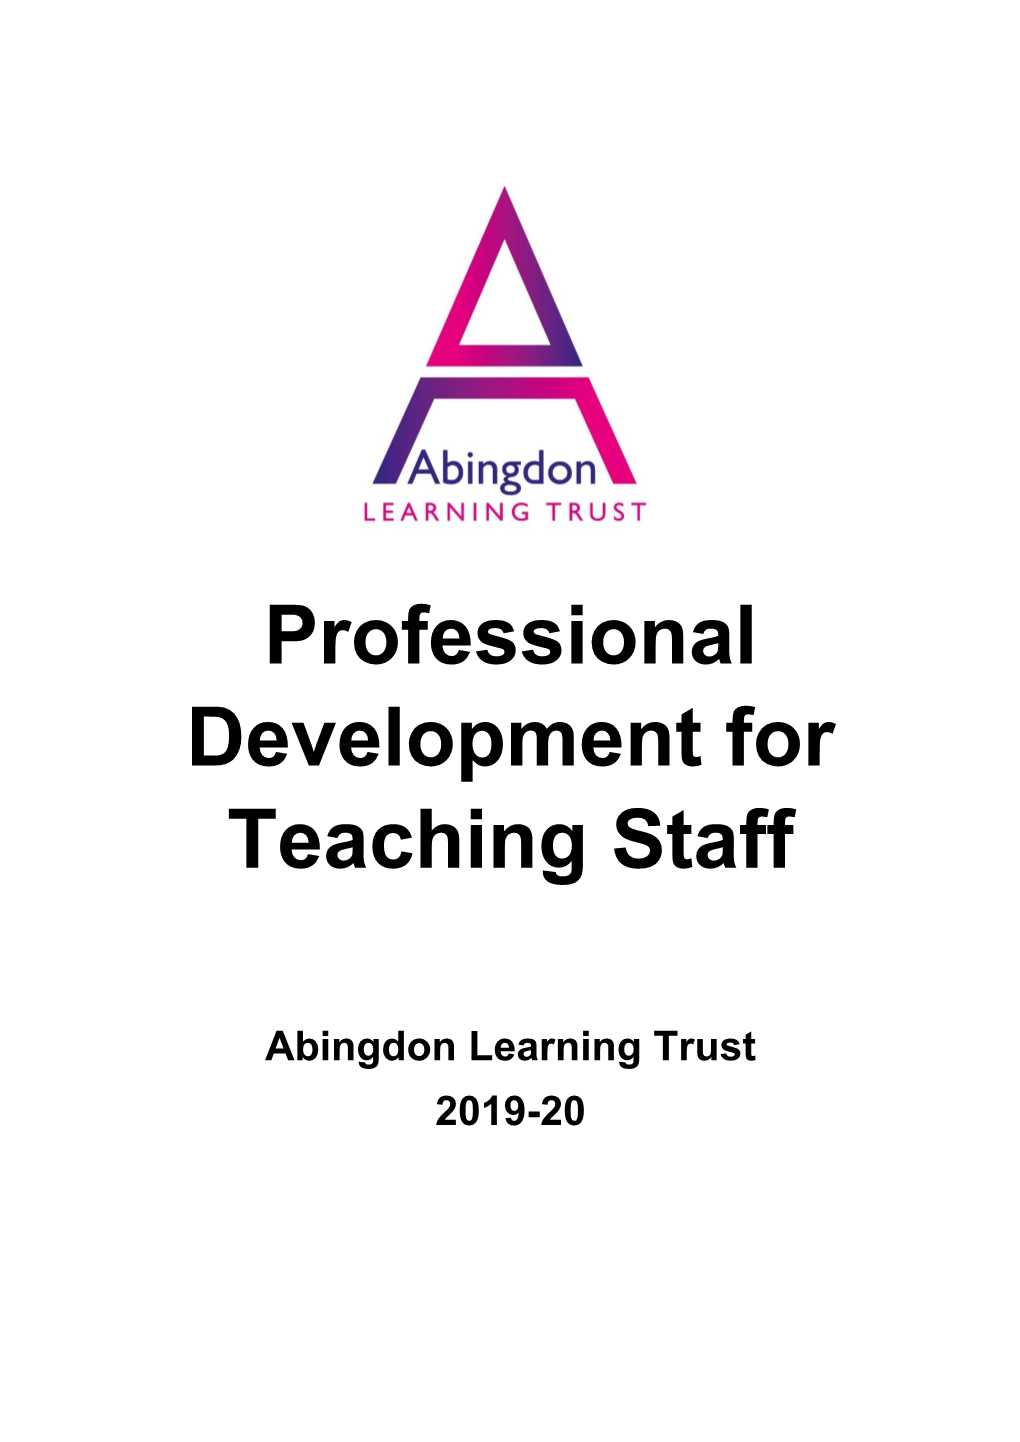 Professional Development for Teaching Staff